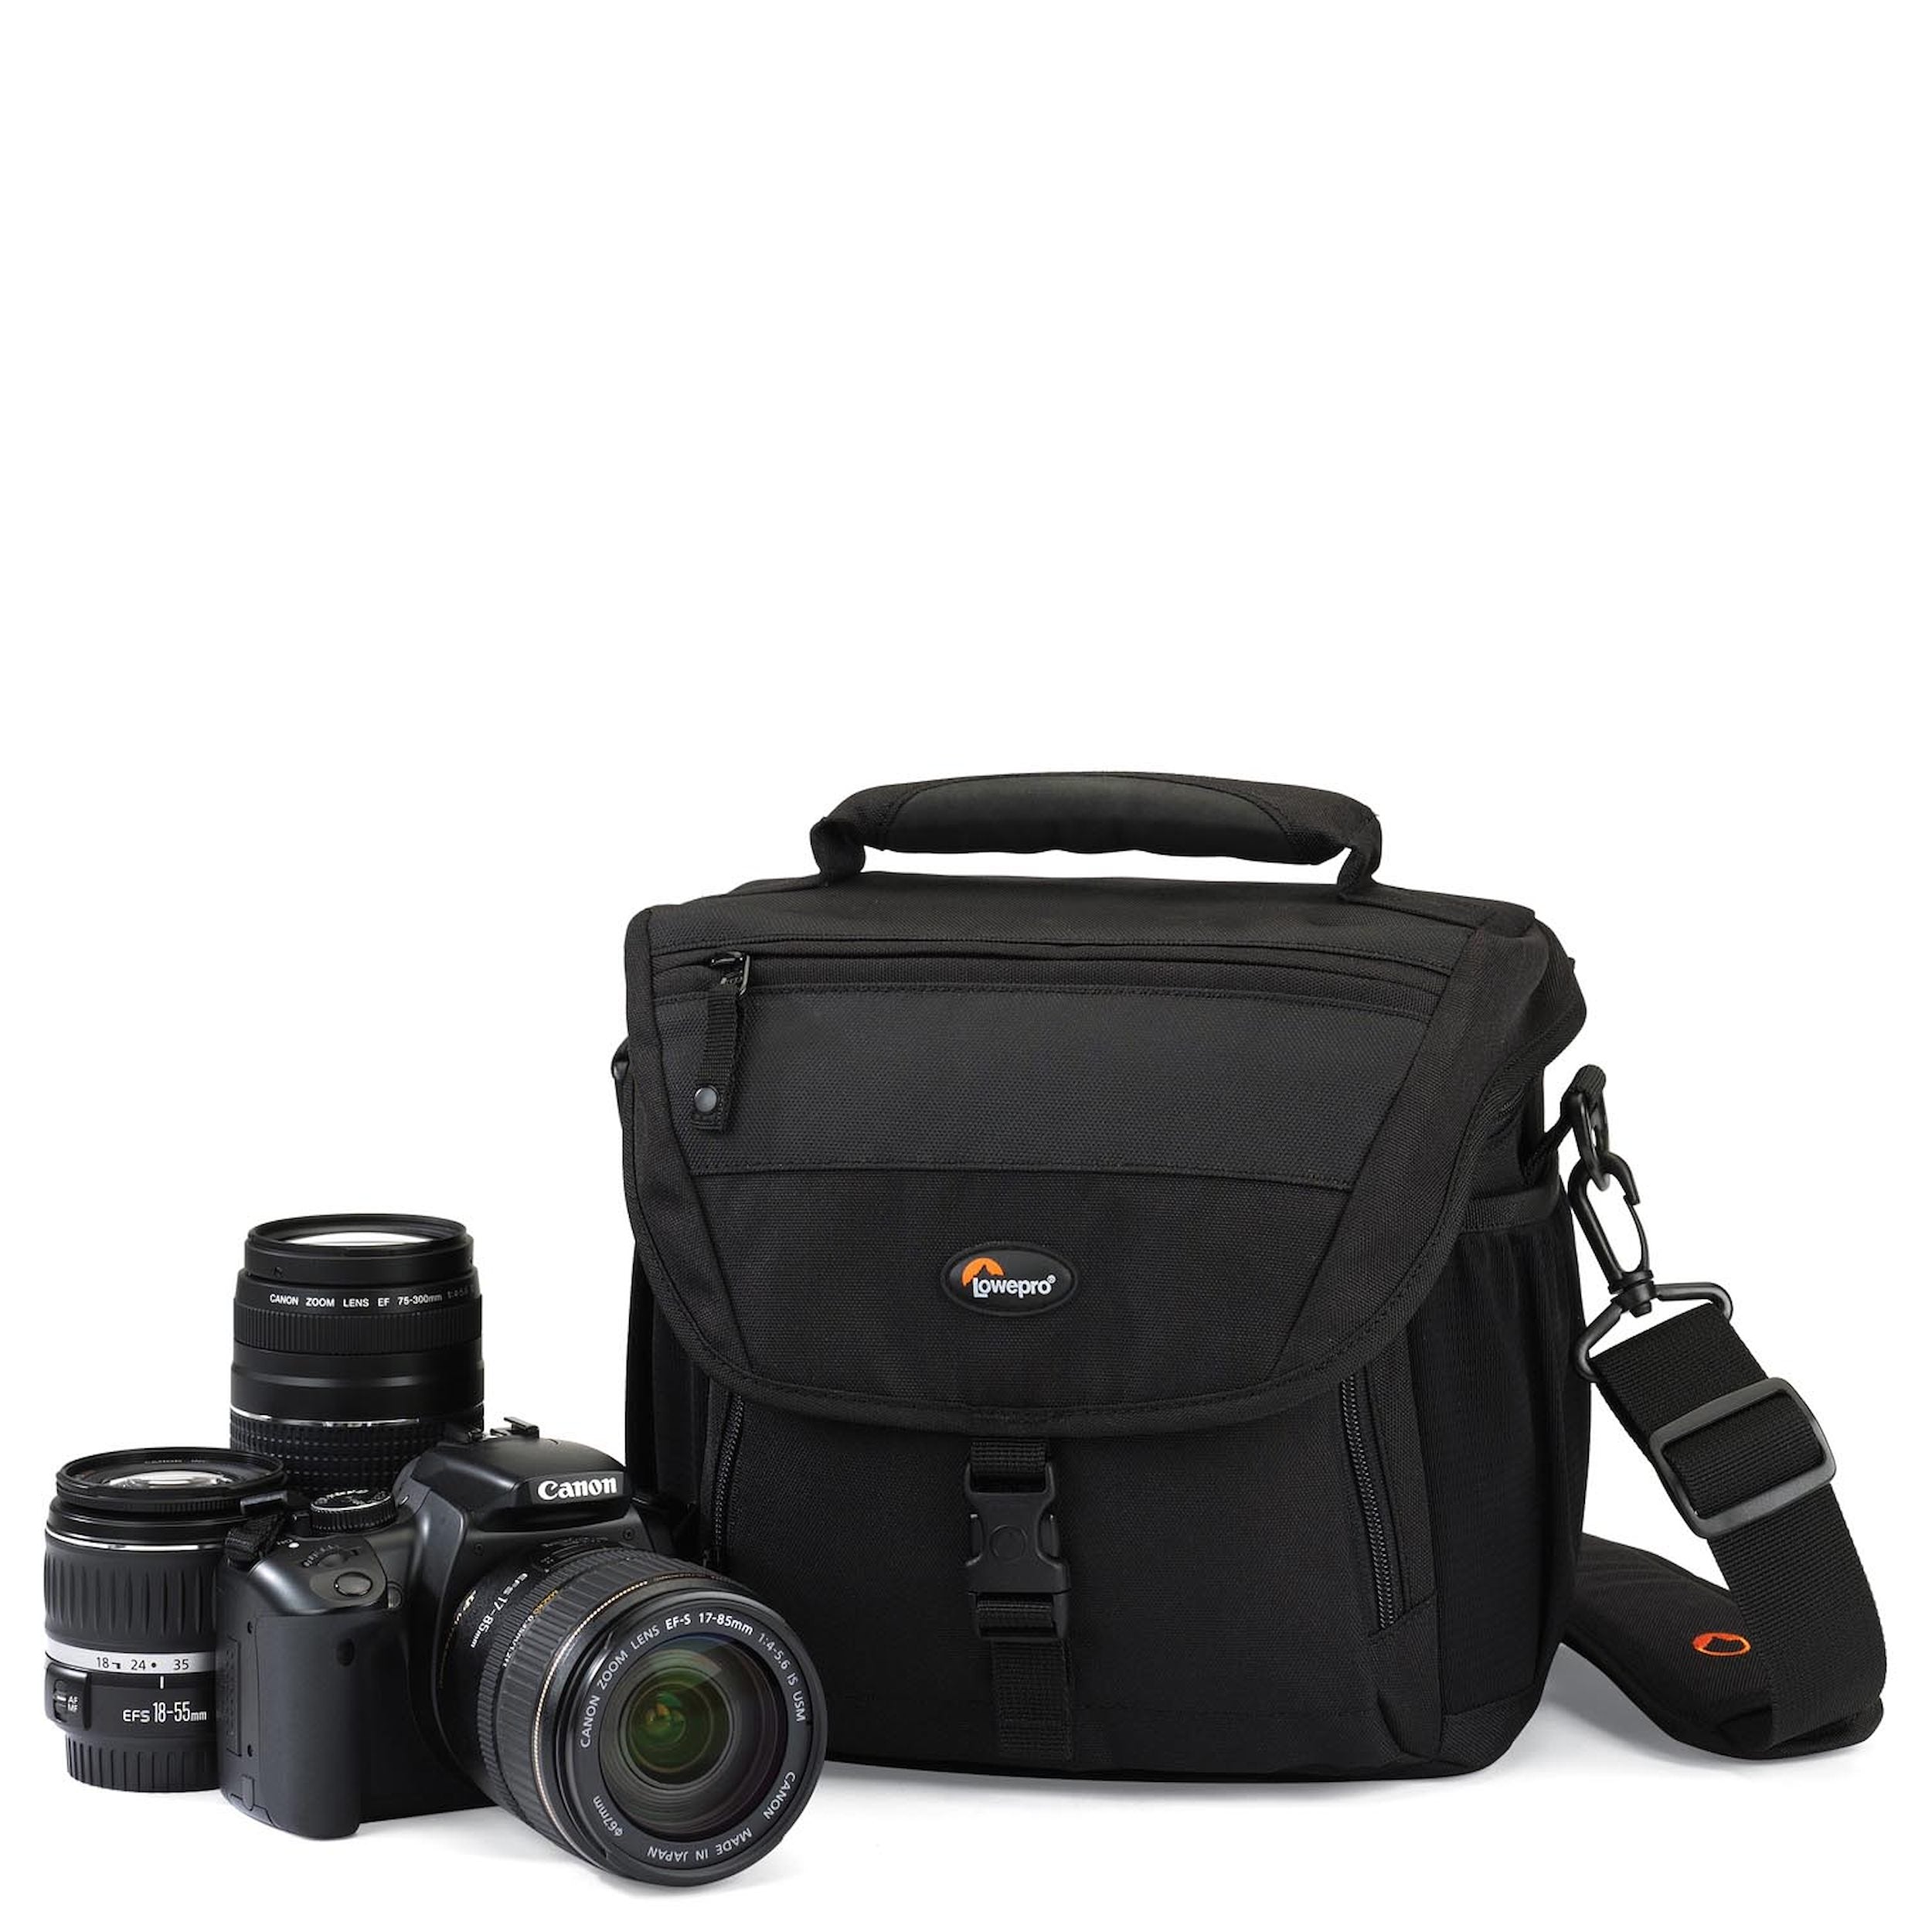 Lowepro Camera Bag Nova 170 AW II (Black)